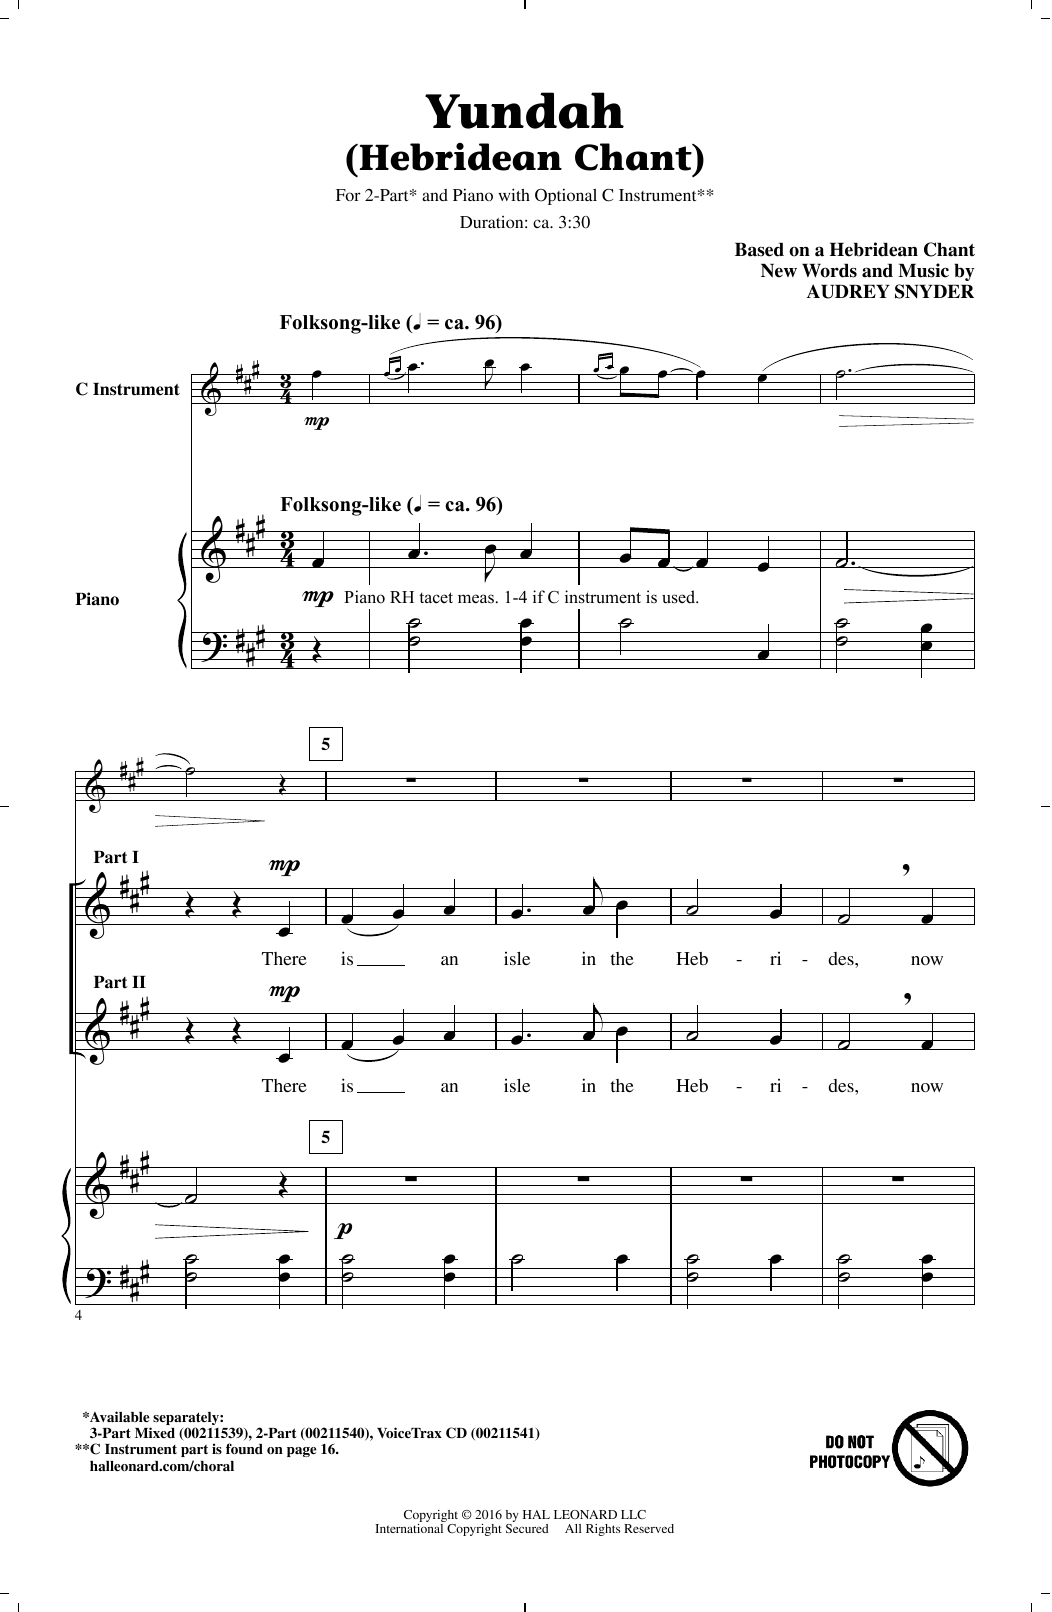 Audrey Snyder Yundah (Hebridean Chant) Sheet Music Notes & Chords for 2-Part Choir - Download or Print PDF